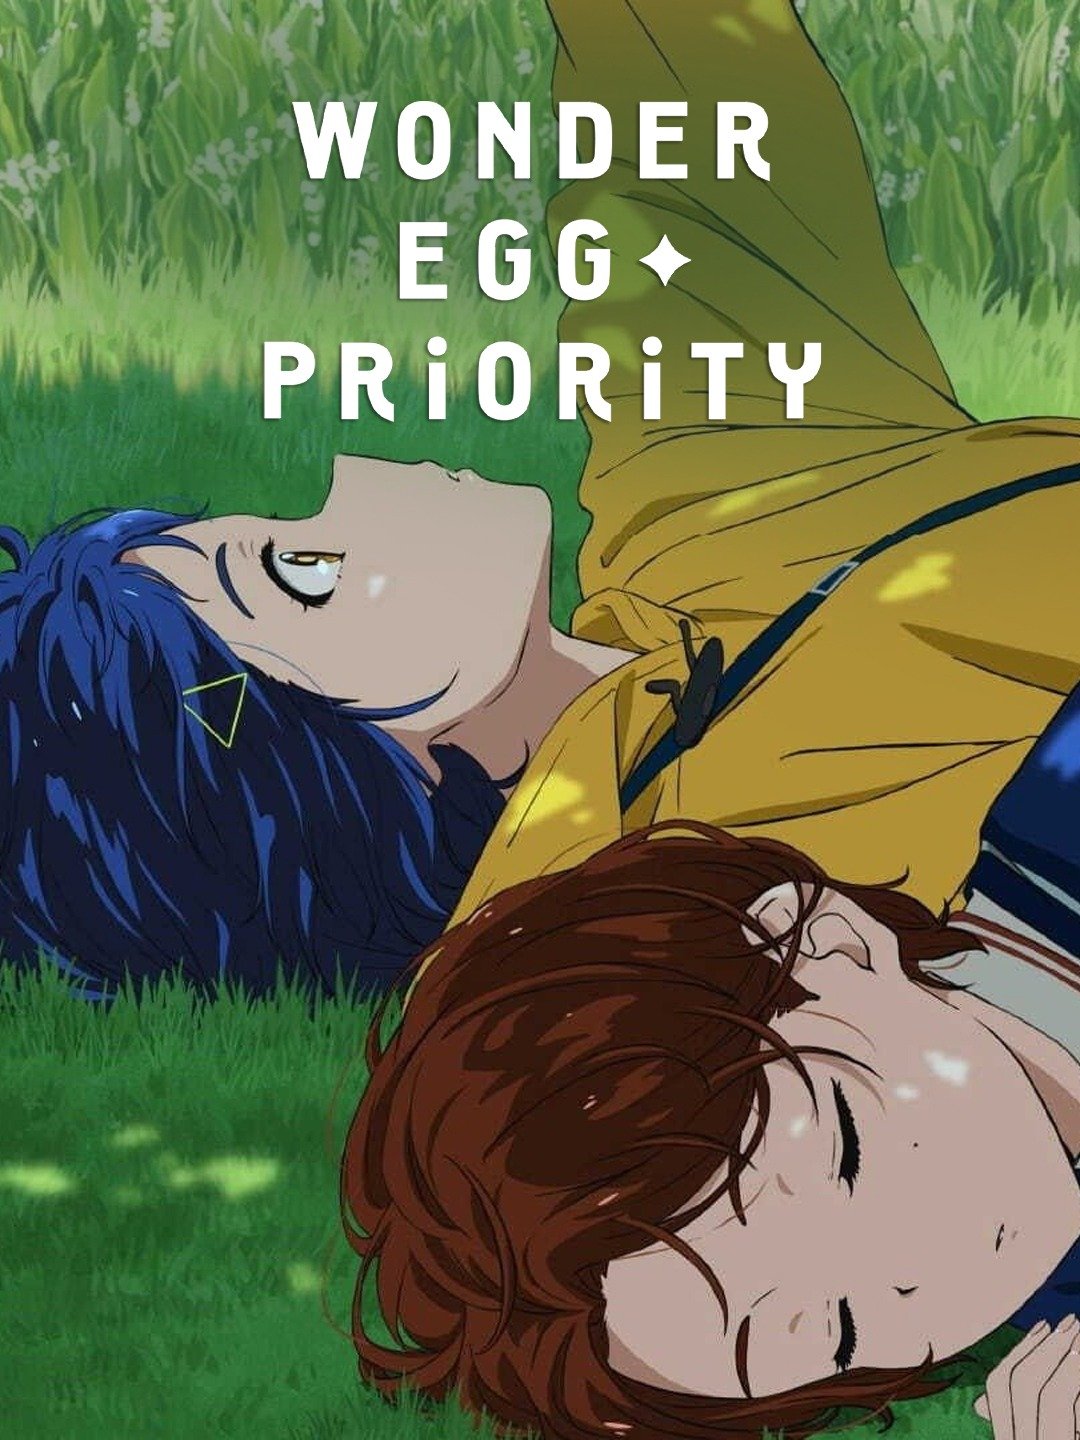 Wonder Egg Priority (TV Mini Series 2021) - IMDb